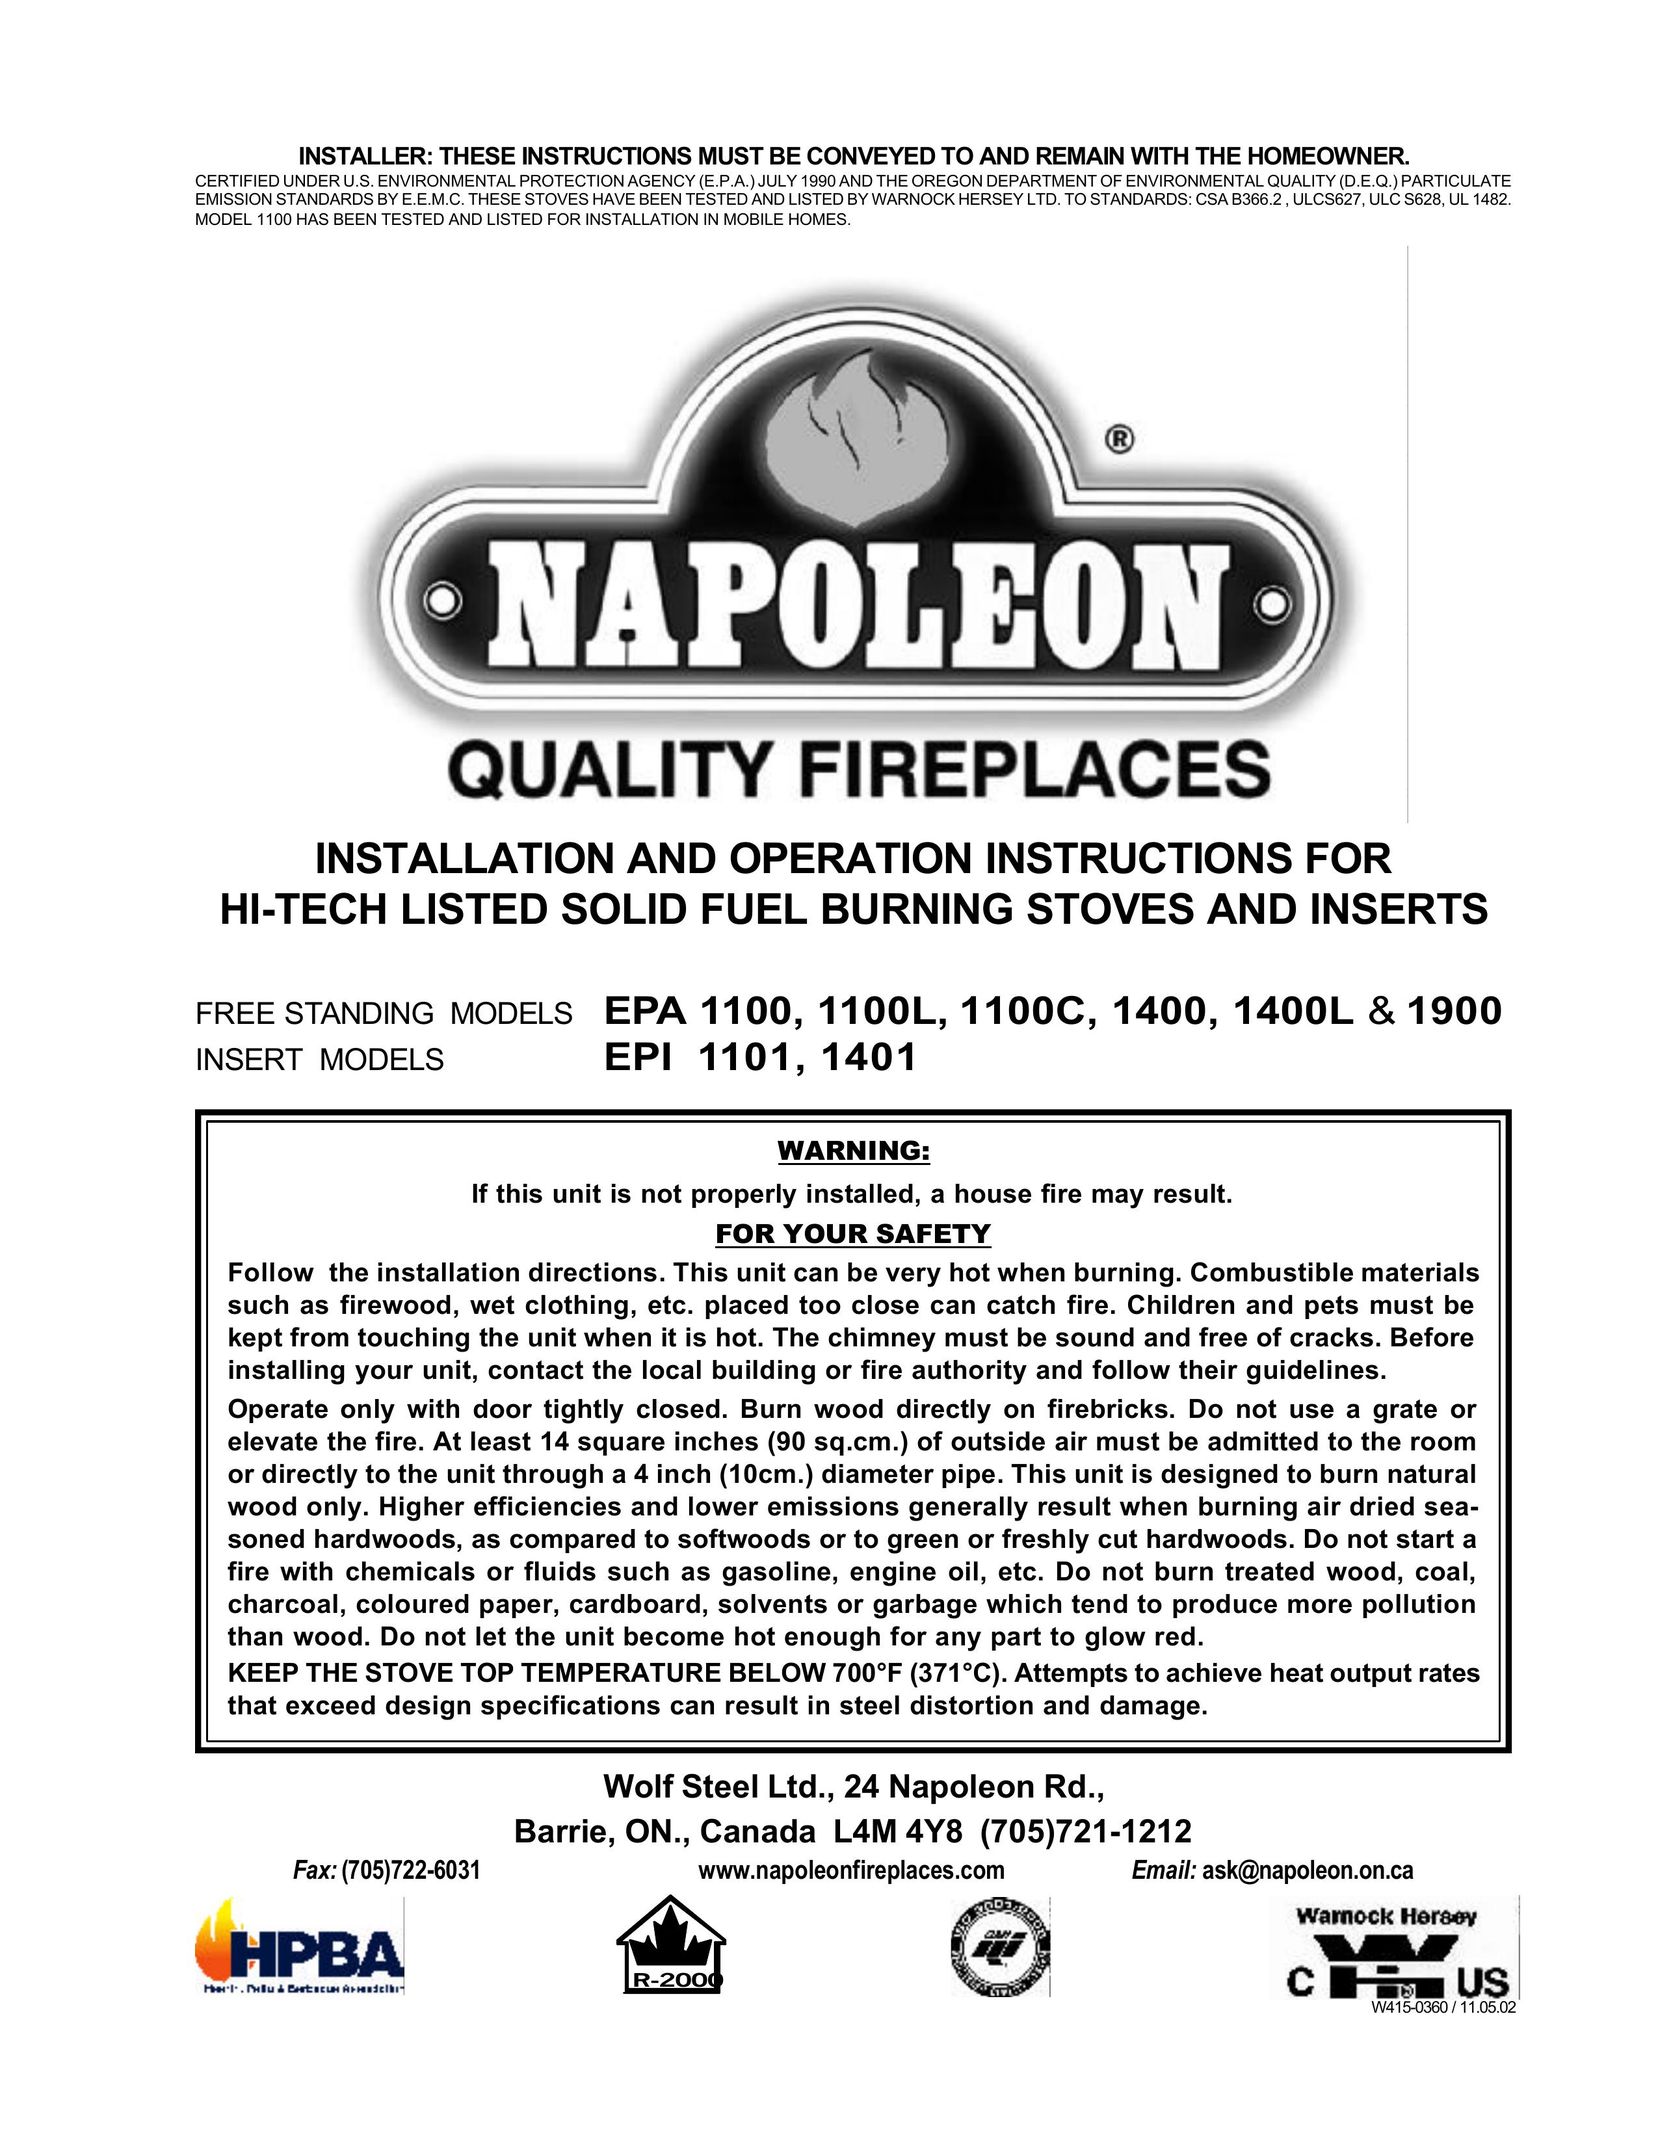 Napoleon Fireplaces EPA 1100L Stove User Manual